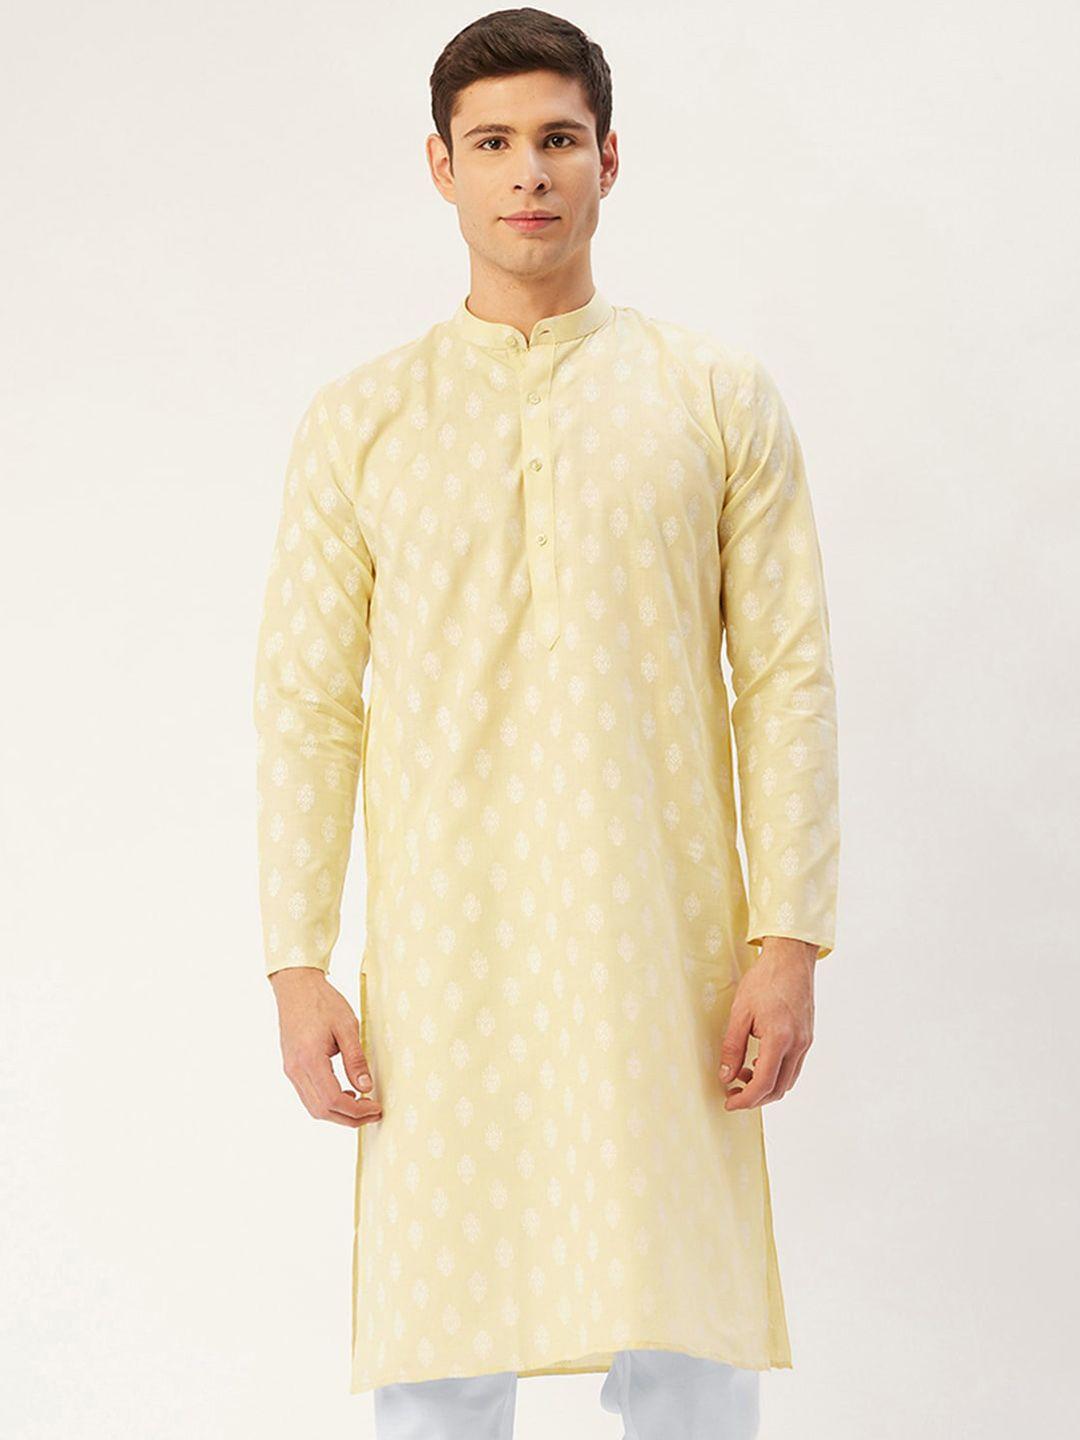 jompers men yellow & white ethnic motifs printed kurta